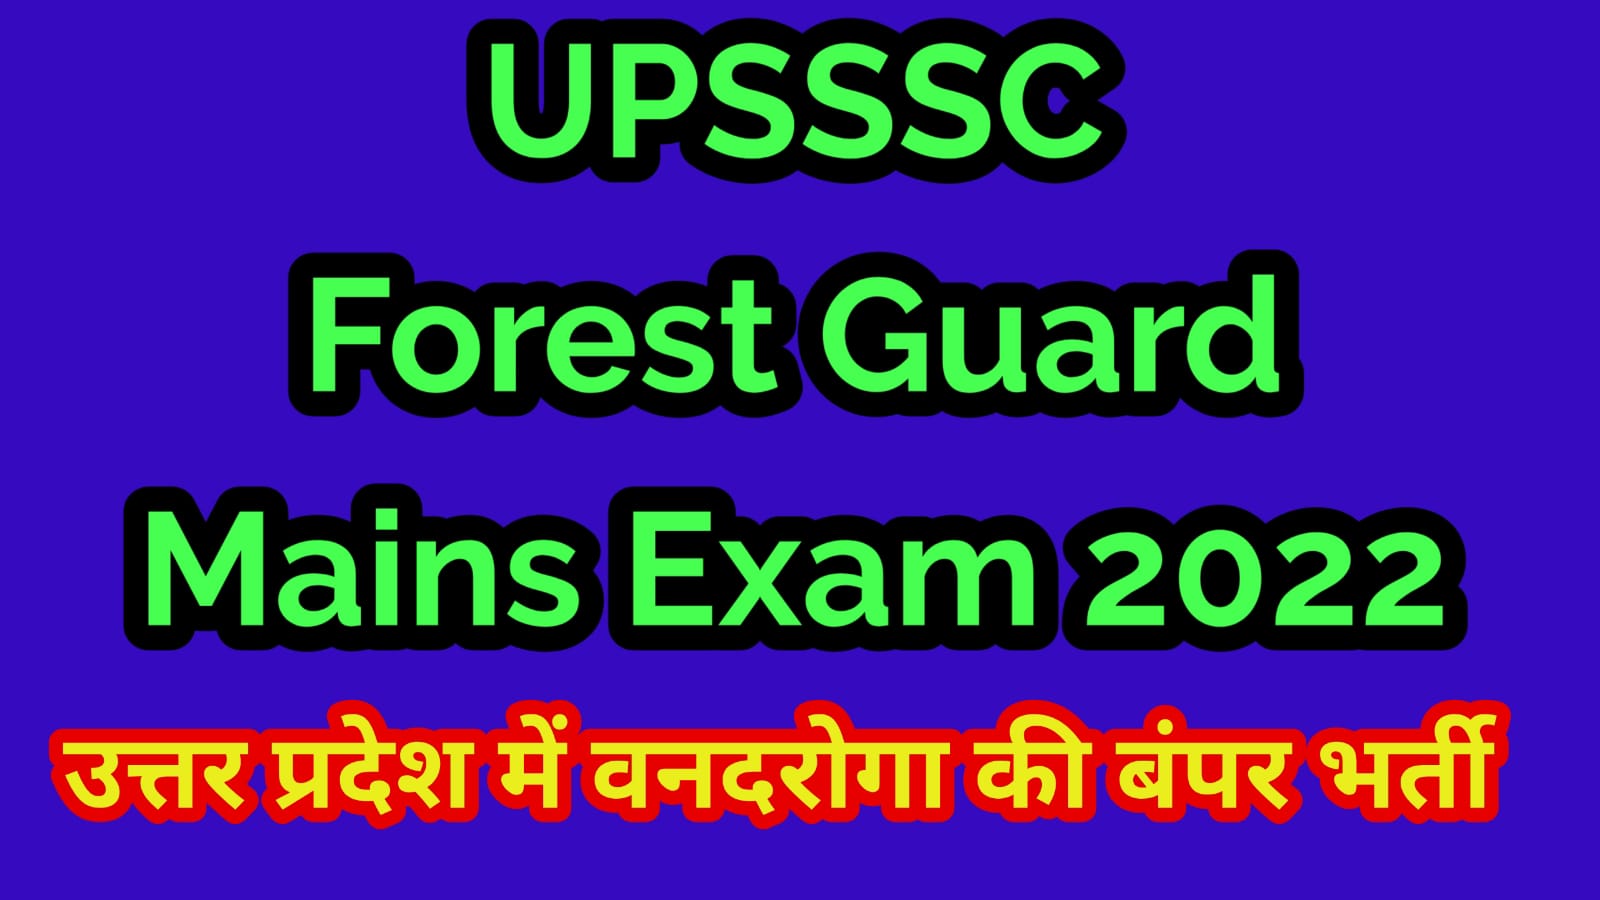 UPSSSC Forest Guard Mains Exam 2022